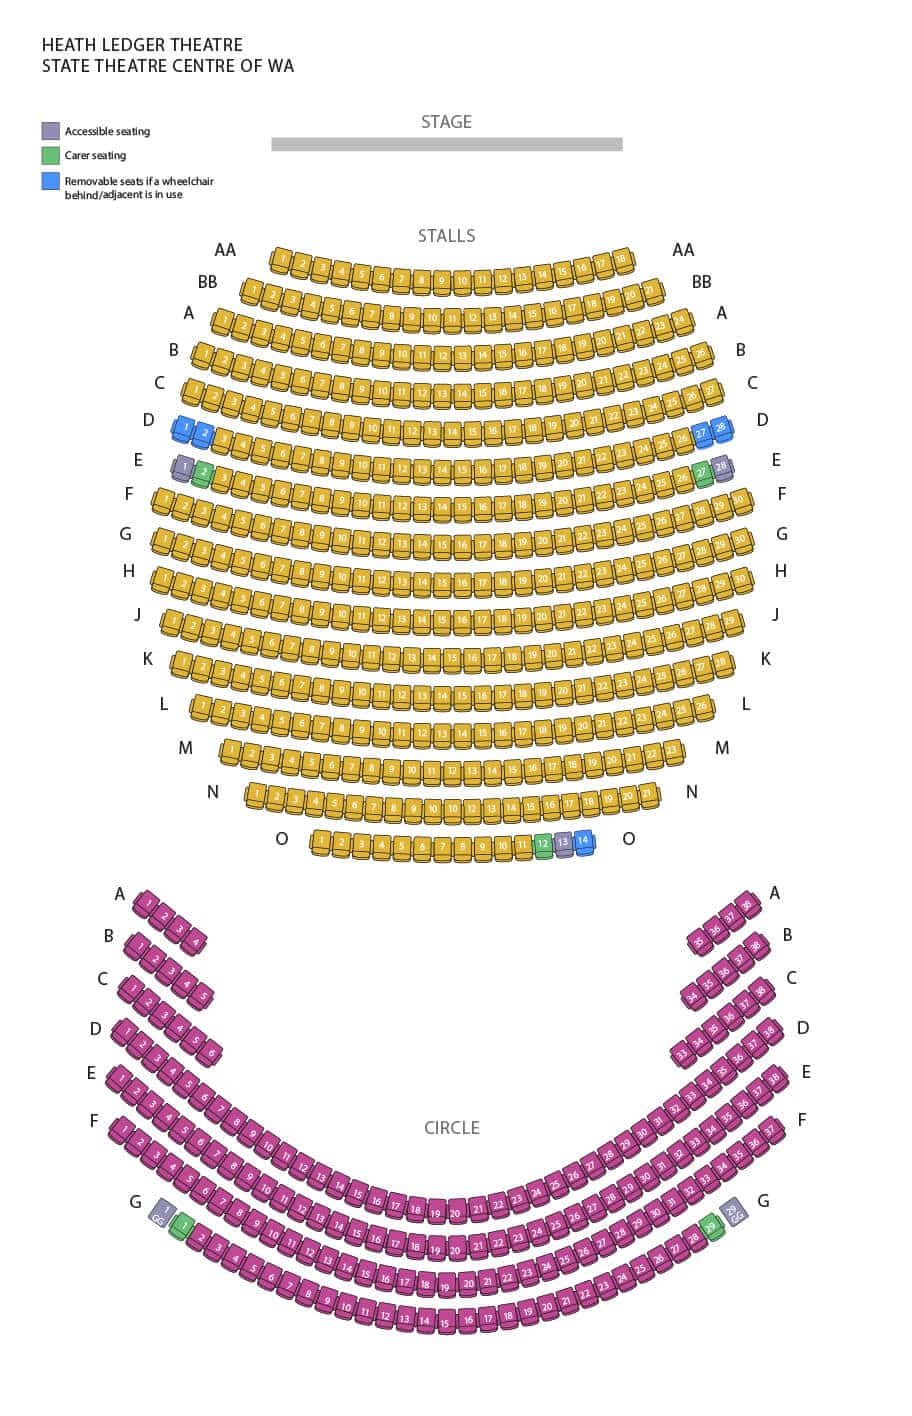 State Theatre Centre of WA - Heath Ledger Theatre Seating Map